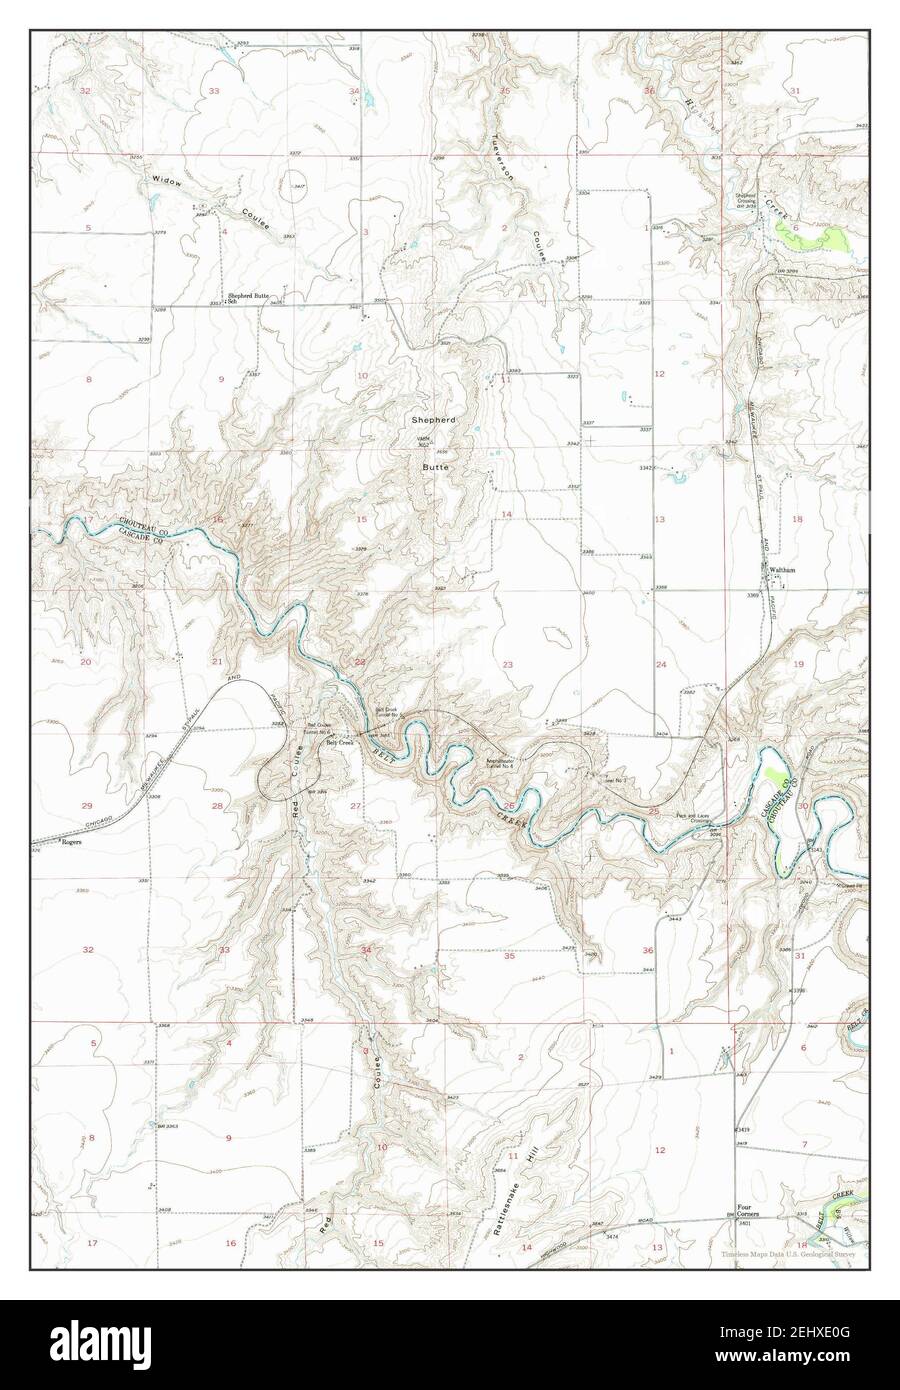 Waltham, Montana, map 1954, 1:24000, United States of America by Timeless Maps, data U.S. Geological Survey Stock Photo